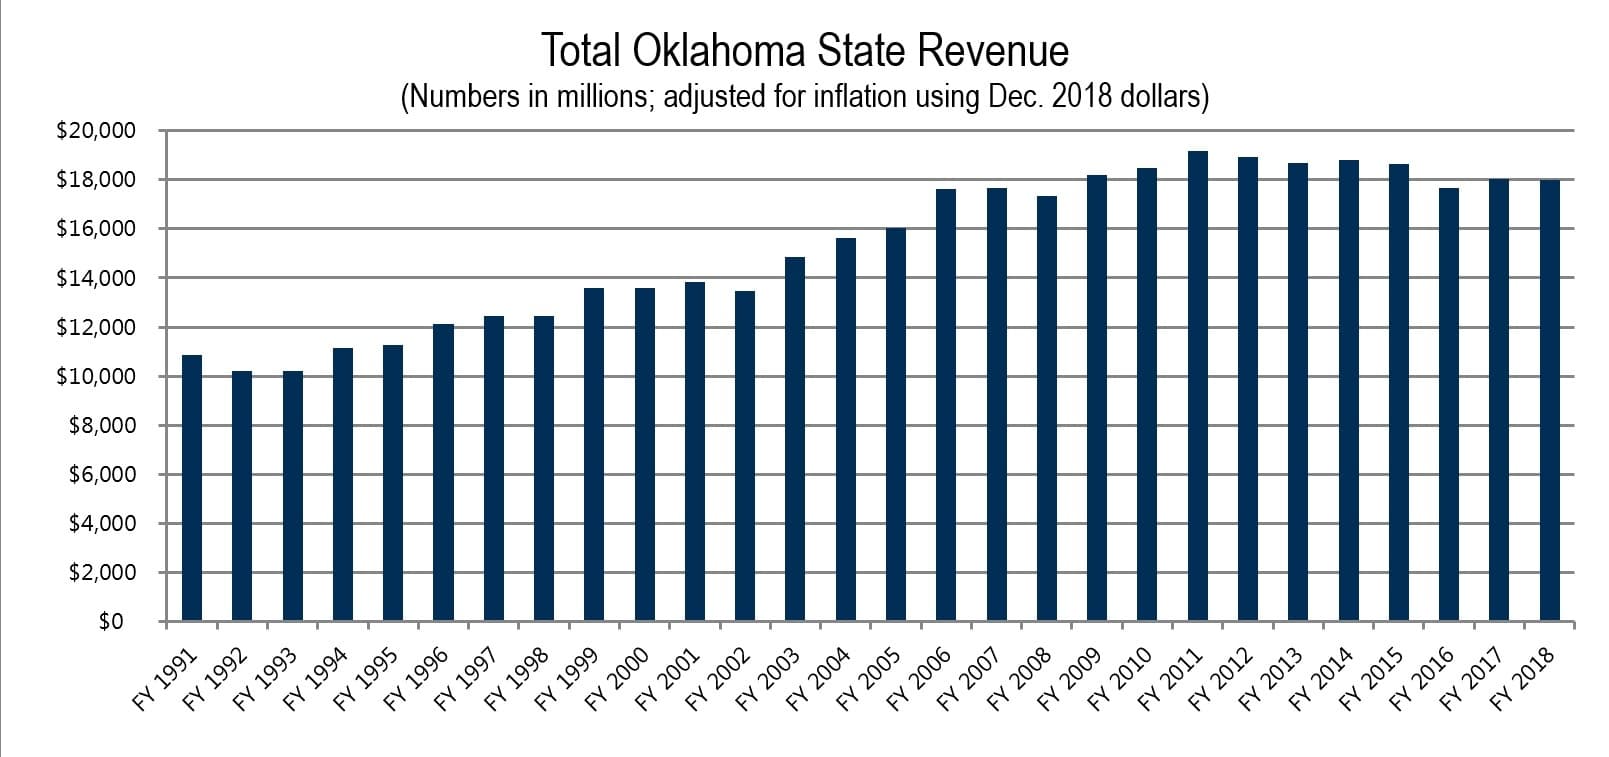 Total Oklahoma State Revenue